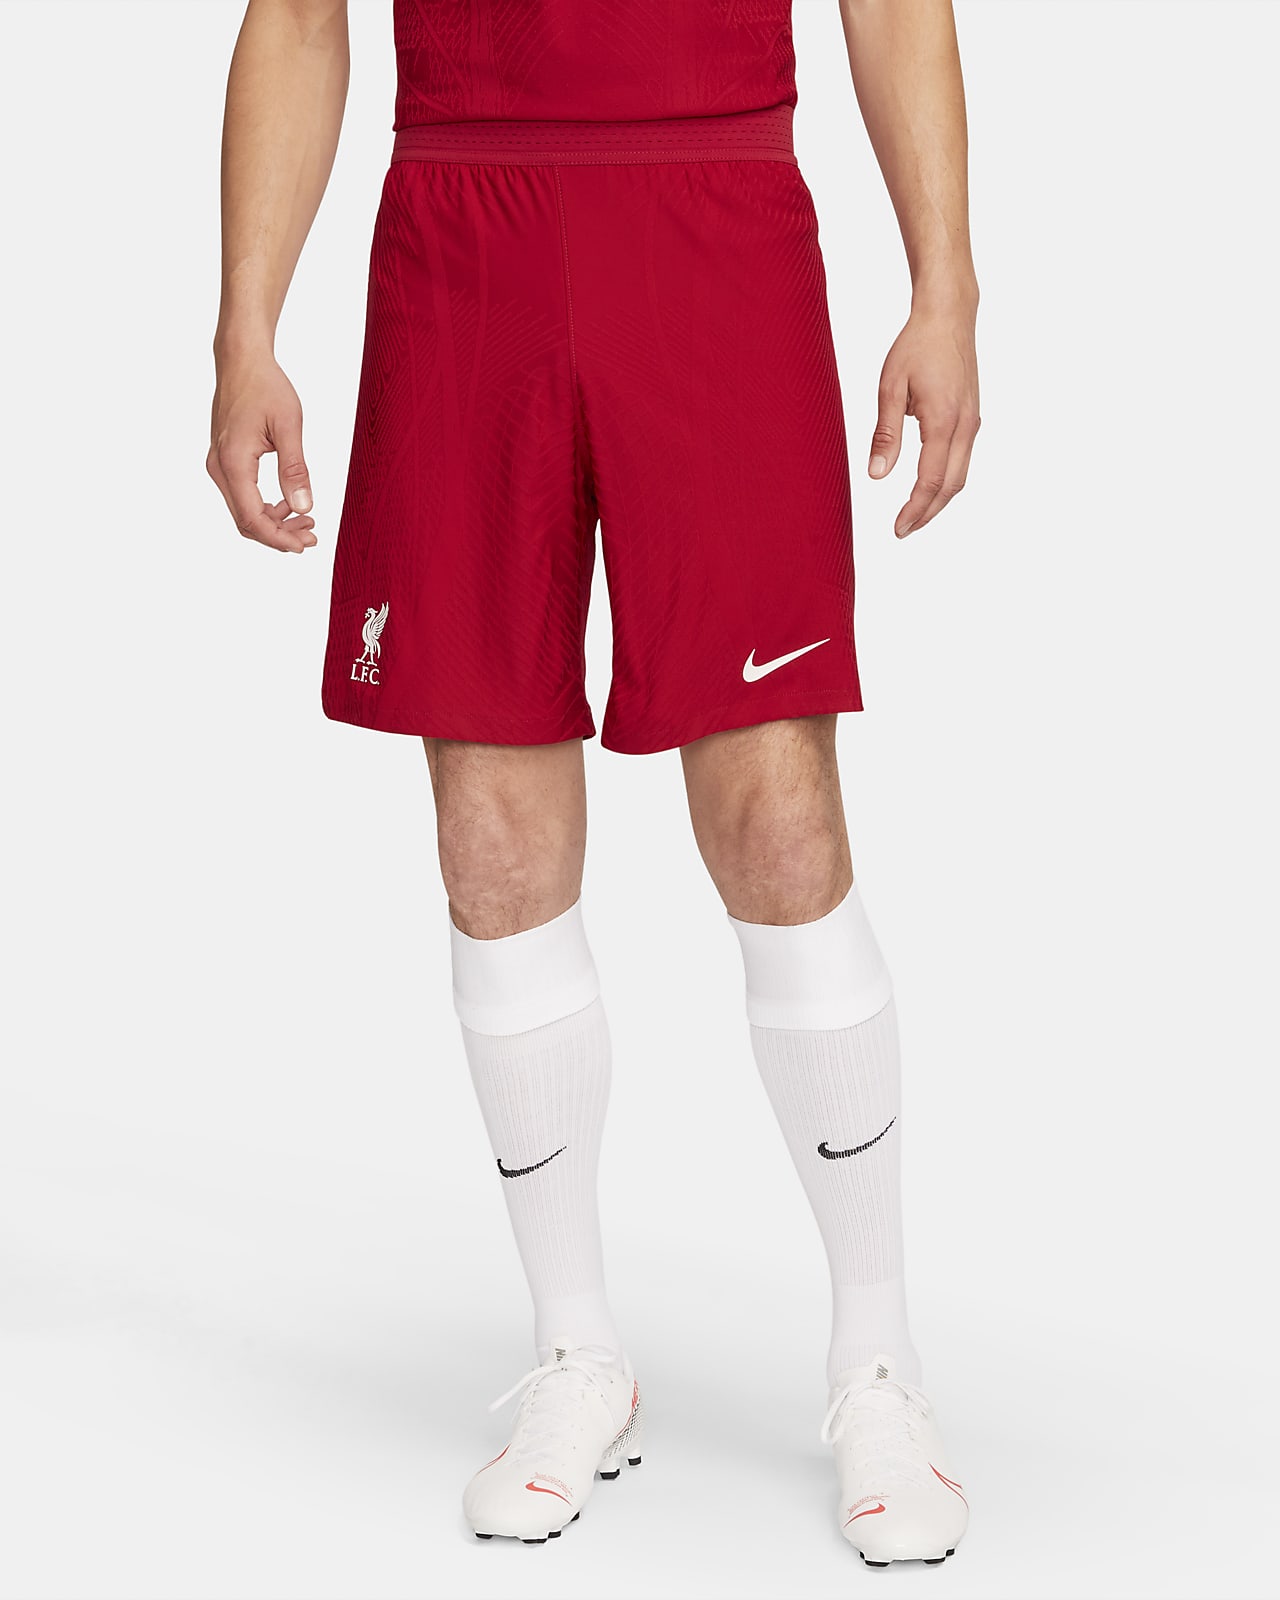 Liverpool FC 2022/23 Match Home Men's Nike Dri-FIT ADV Soccer Jersey